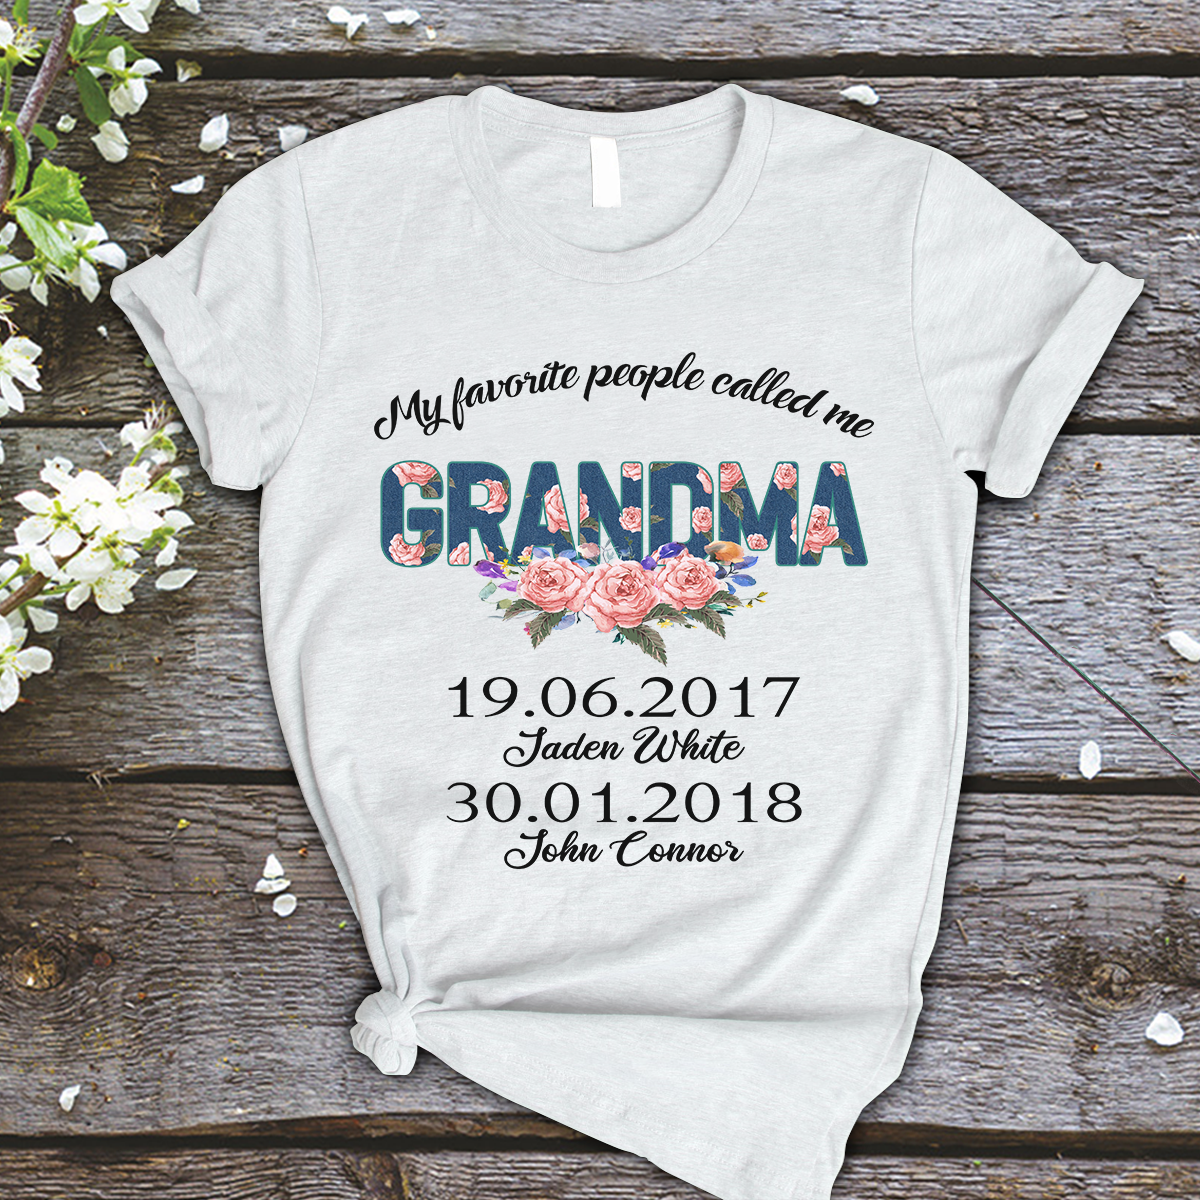 My favorite people call me grandma shirt, grandma shirt with name, grandma T-shirt with name, grandmother shirt, grandma year of birth shirt